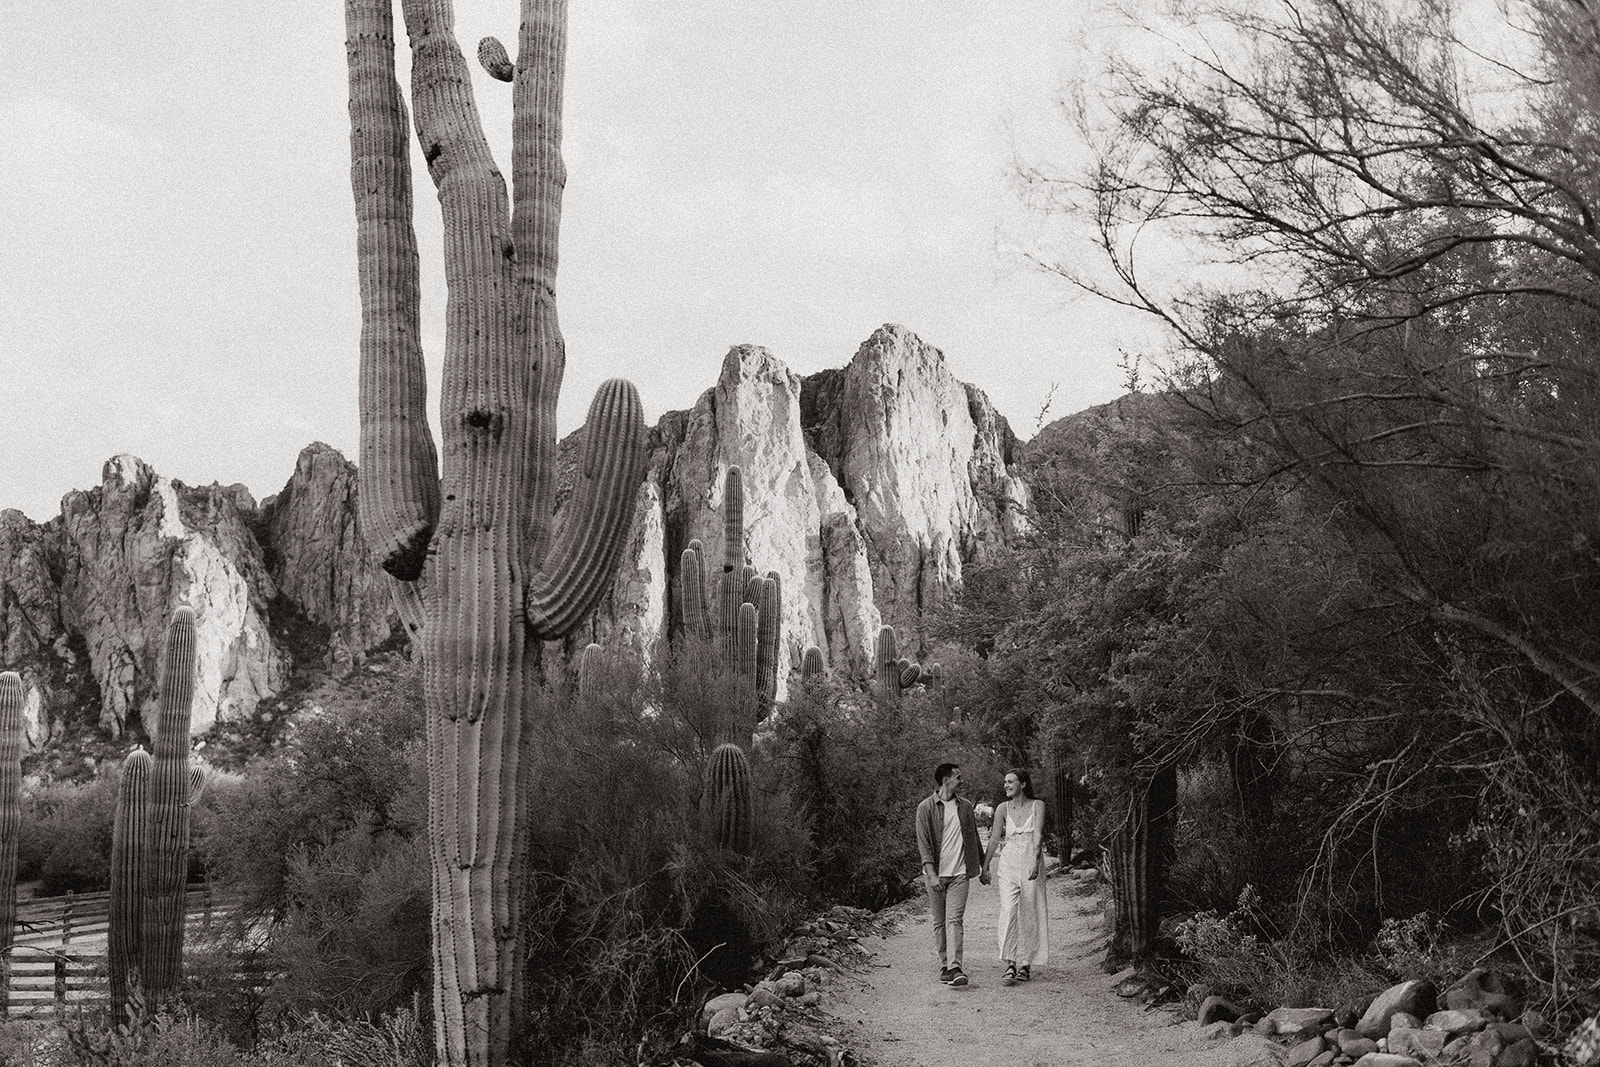 couple walking through the cacti at saguaro lake guest ranch Arizona 